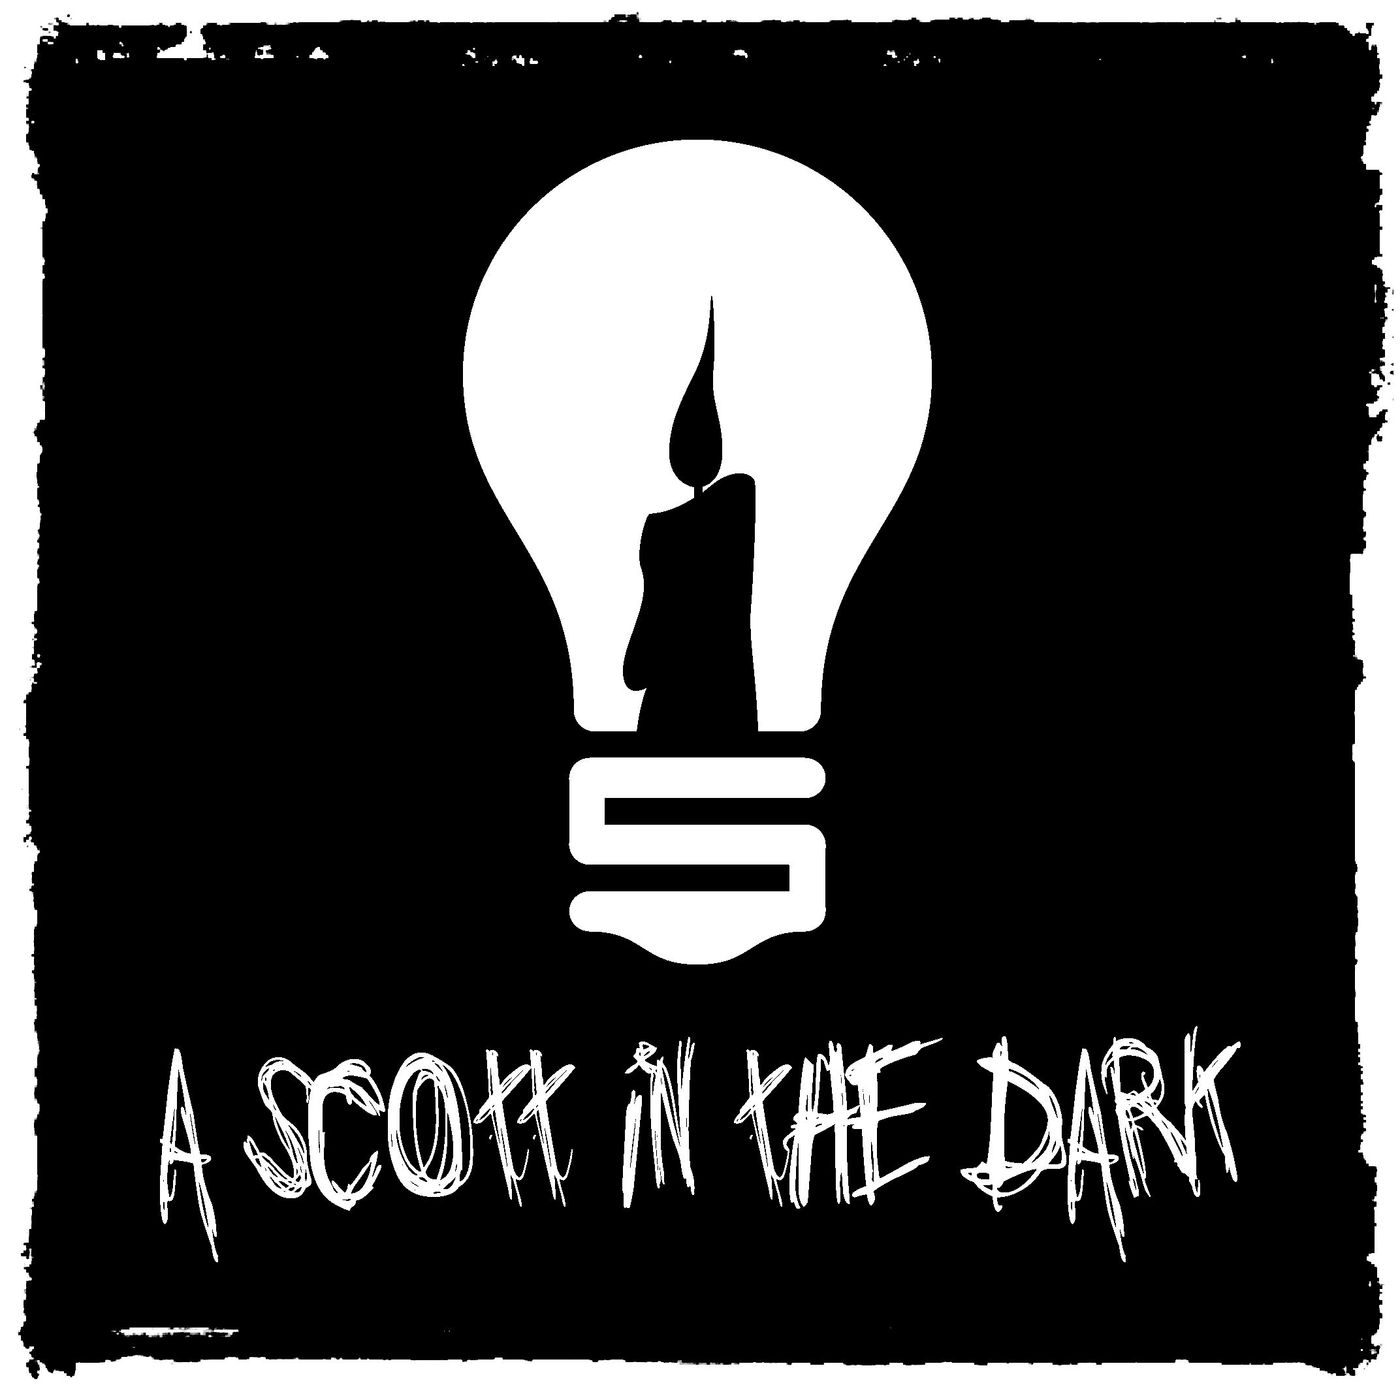 [A Scott in the Dark] Episode 17 The Haunted Attraction Theatre Overlap